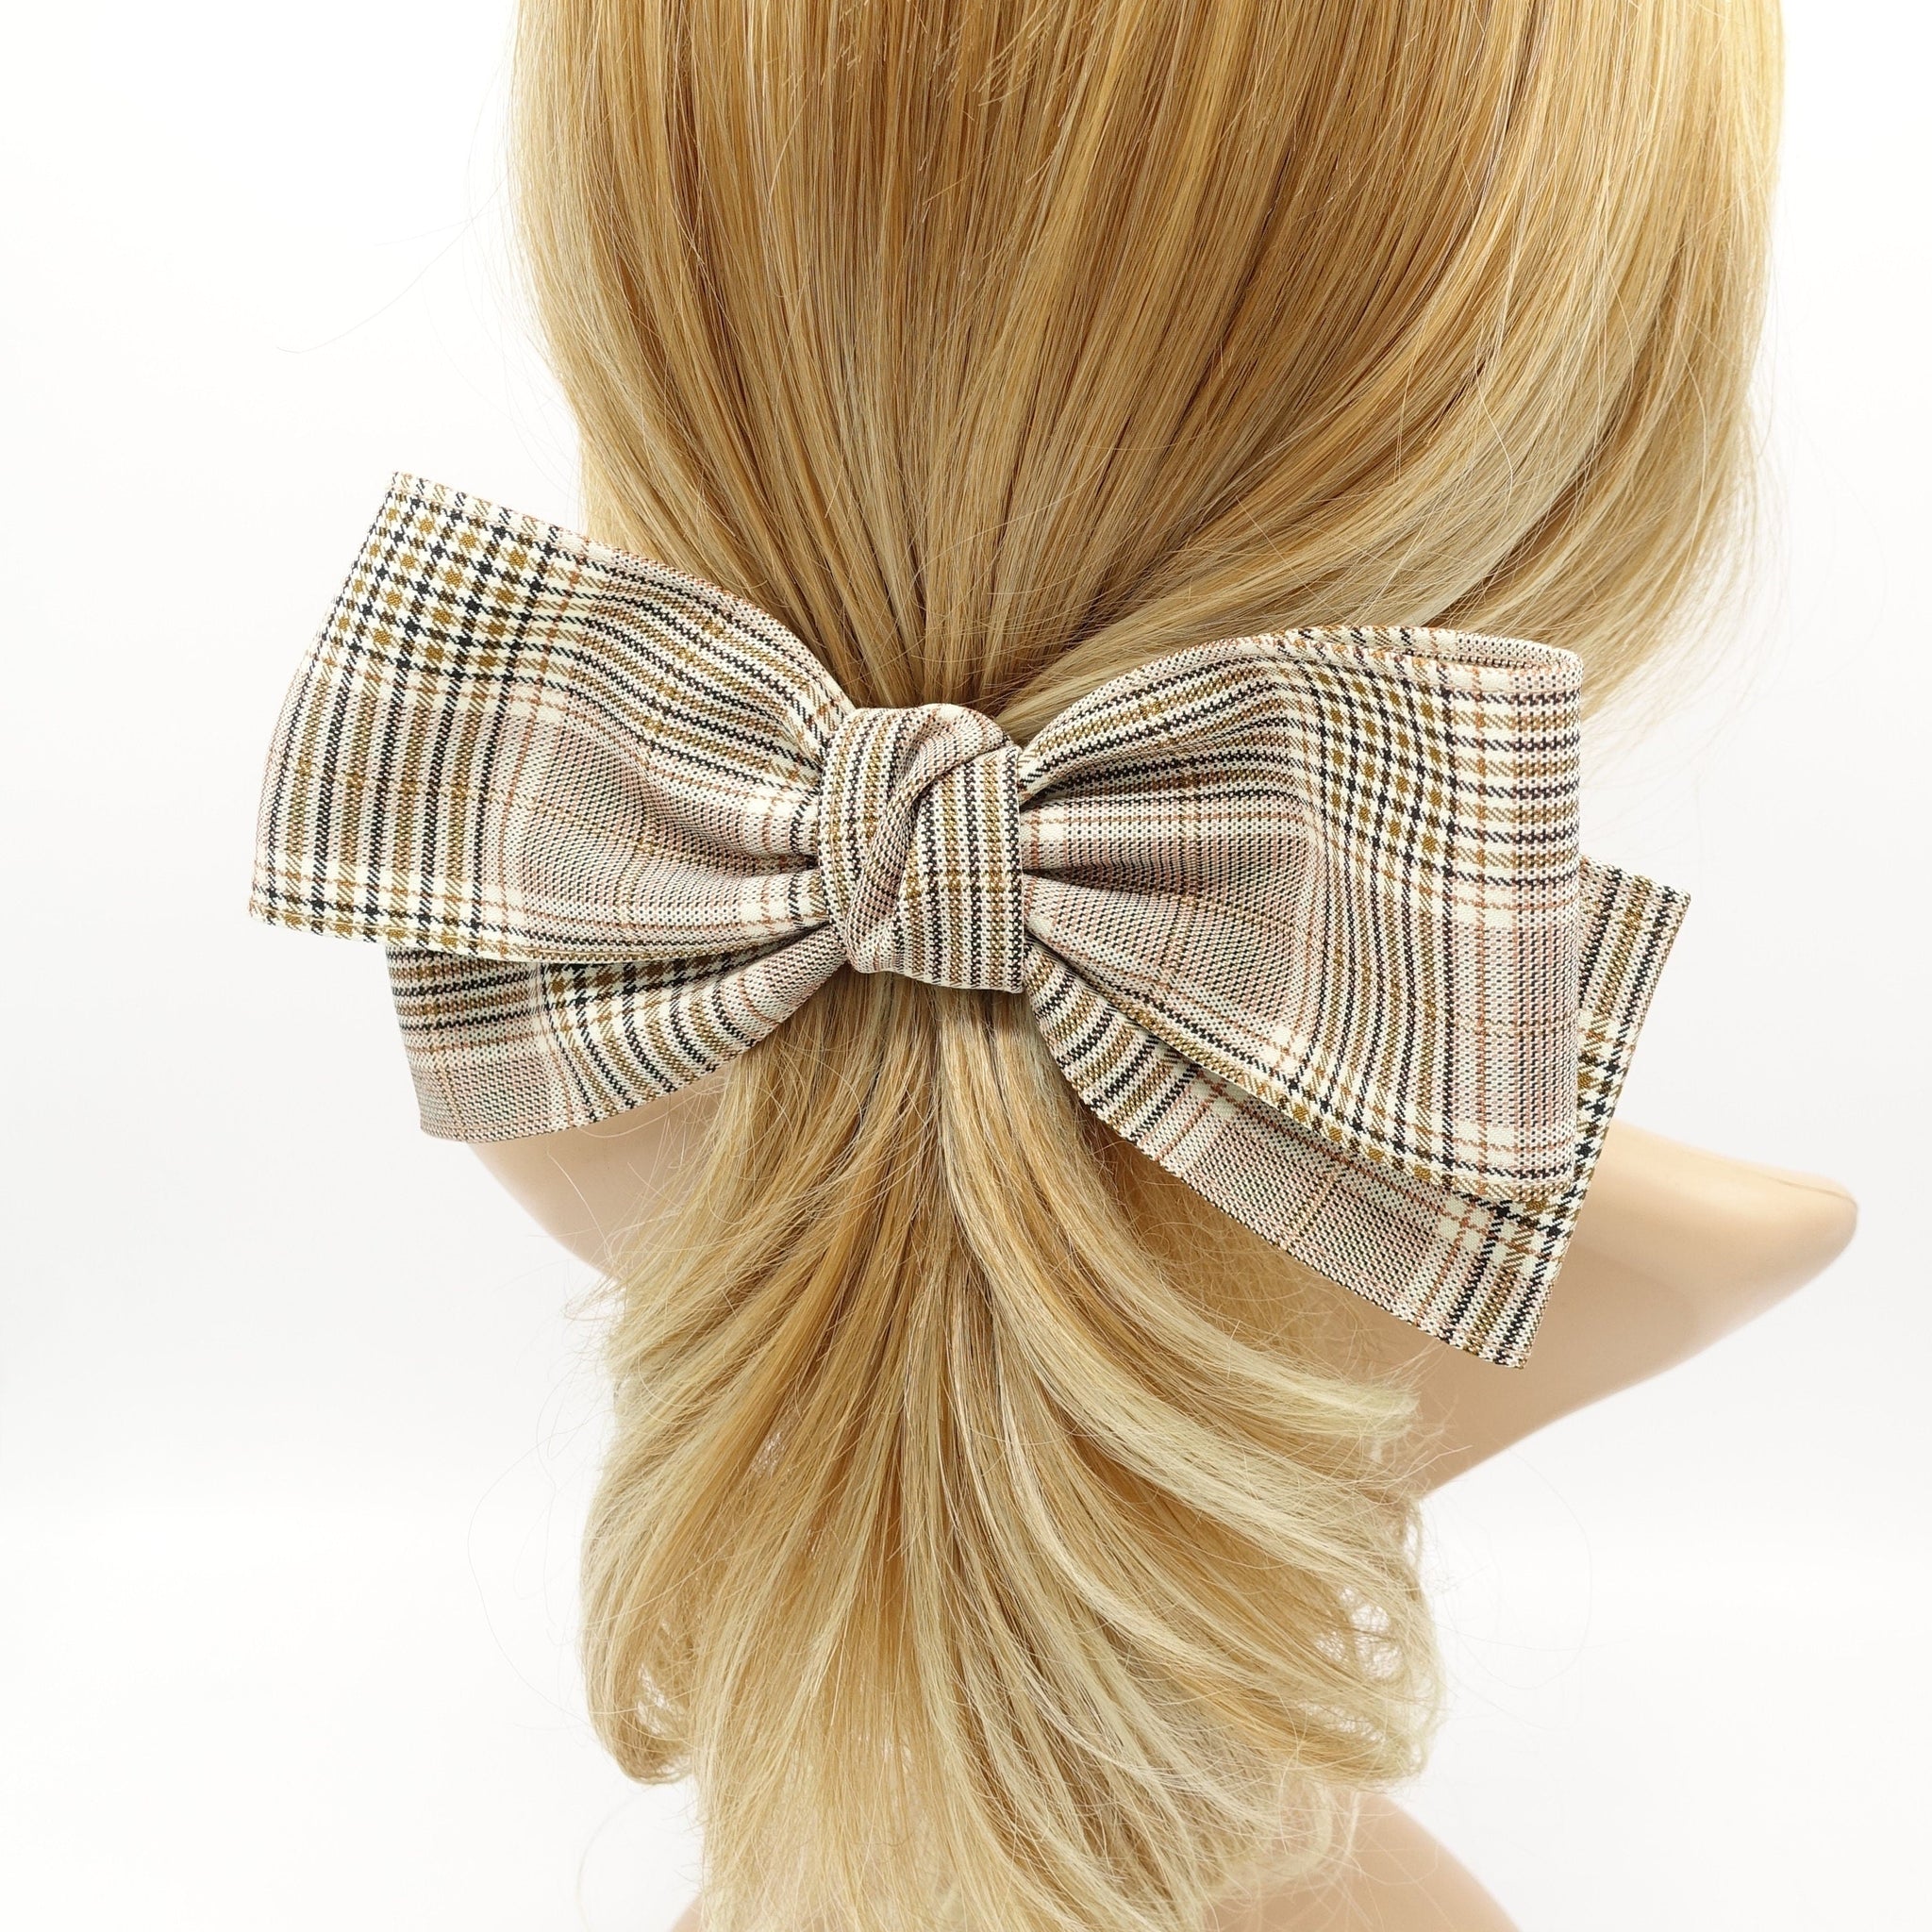 veryshine.com Barrette (Bow) Beige plaid hair bow office hair accessory for women